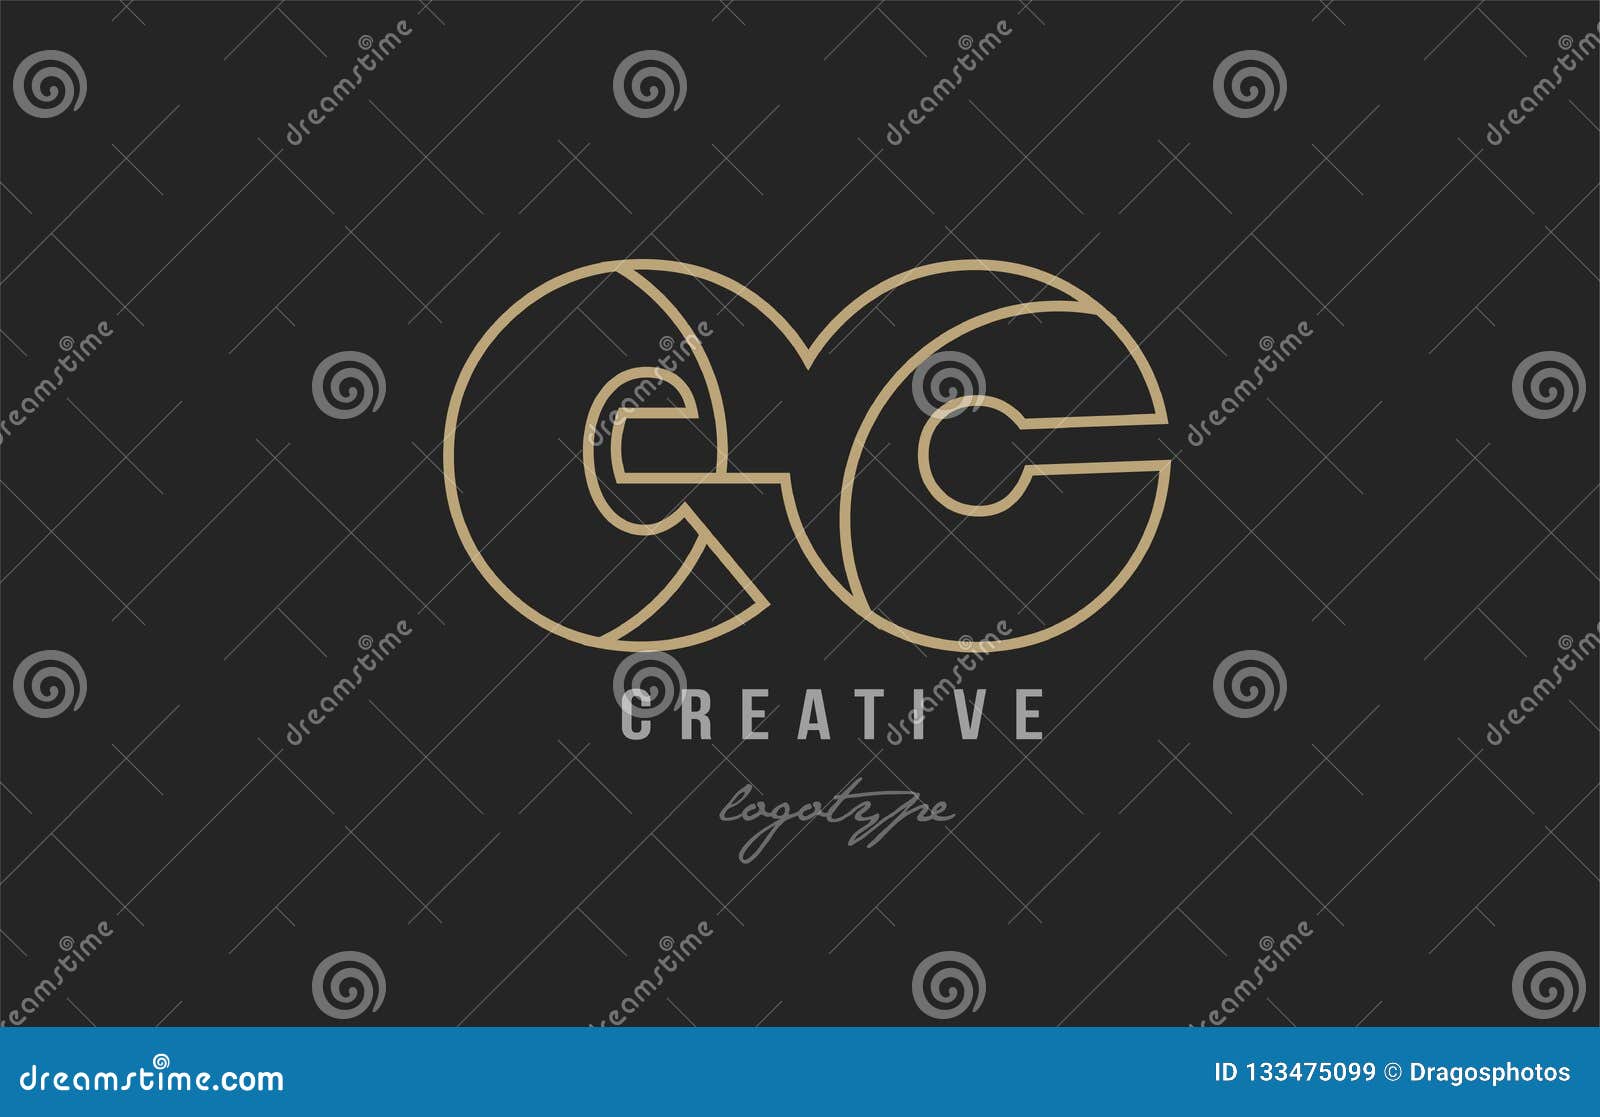 black and yellow gold alphabet letter ec e c logo combination co